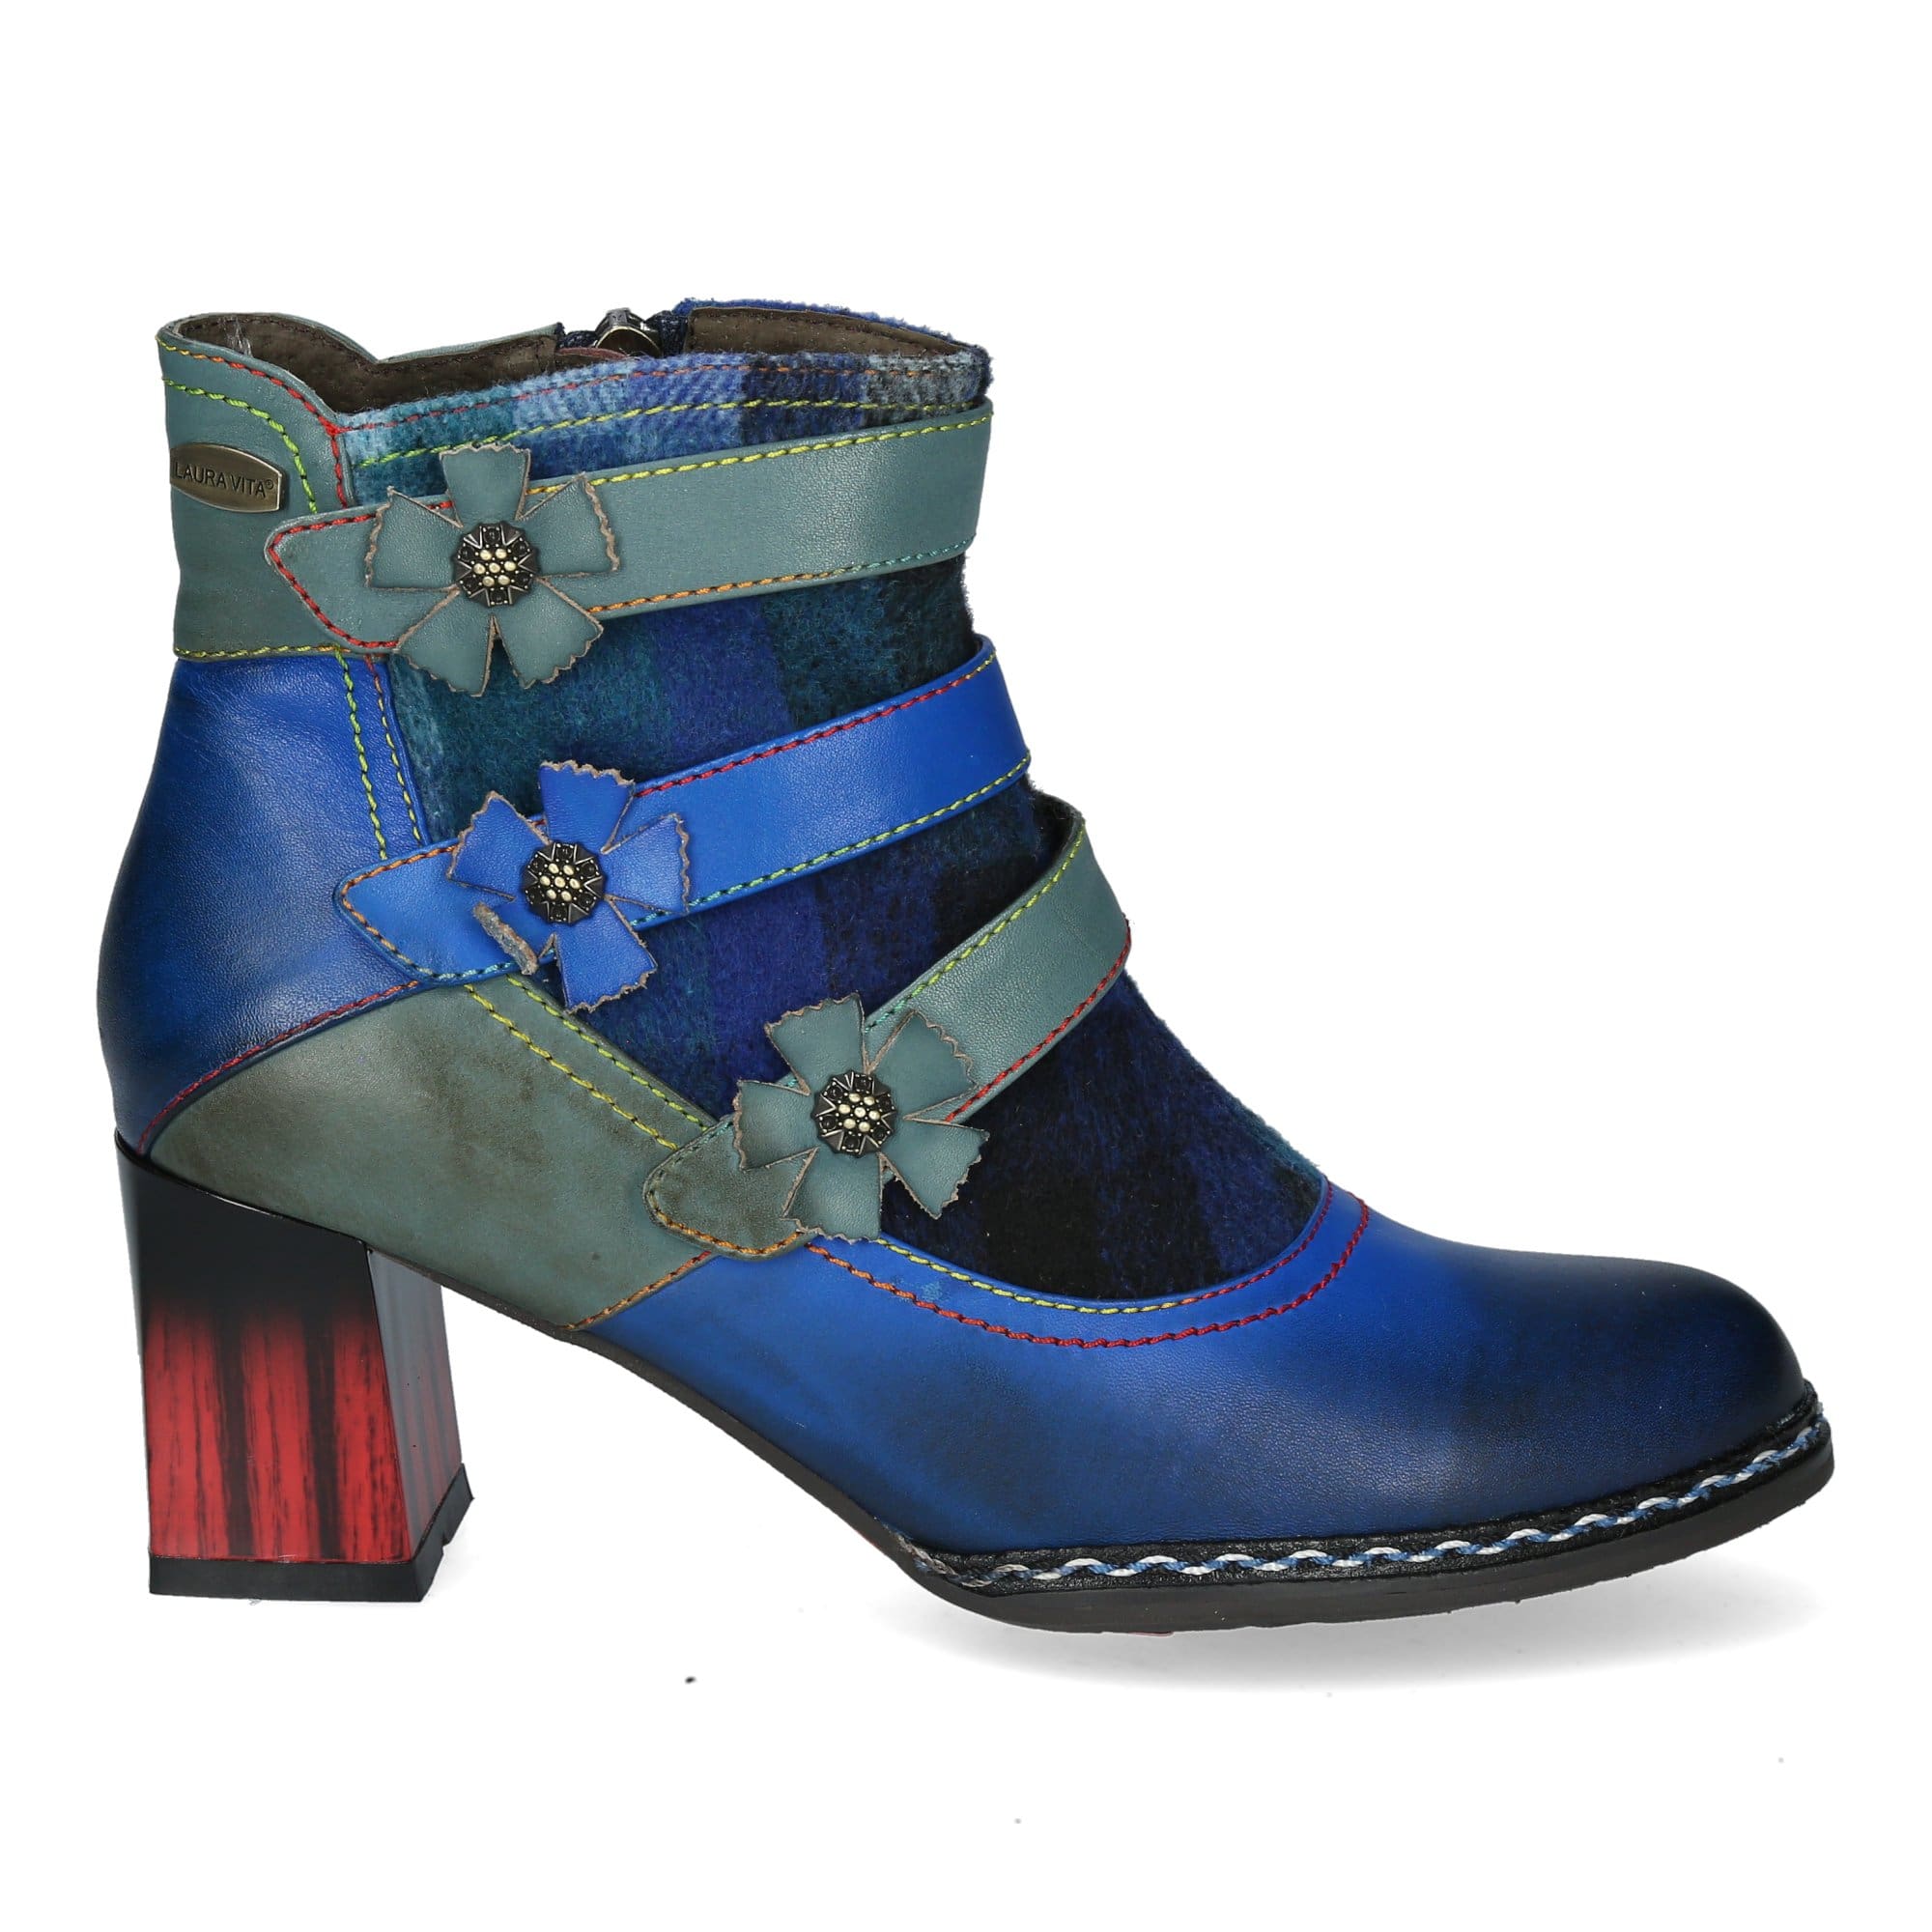 GACLAO 09 - 35 / Blue - Boots